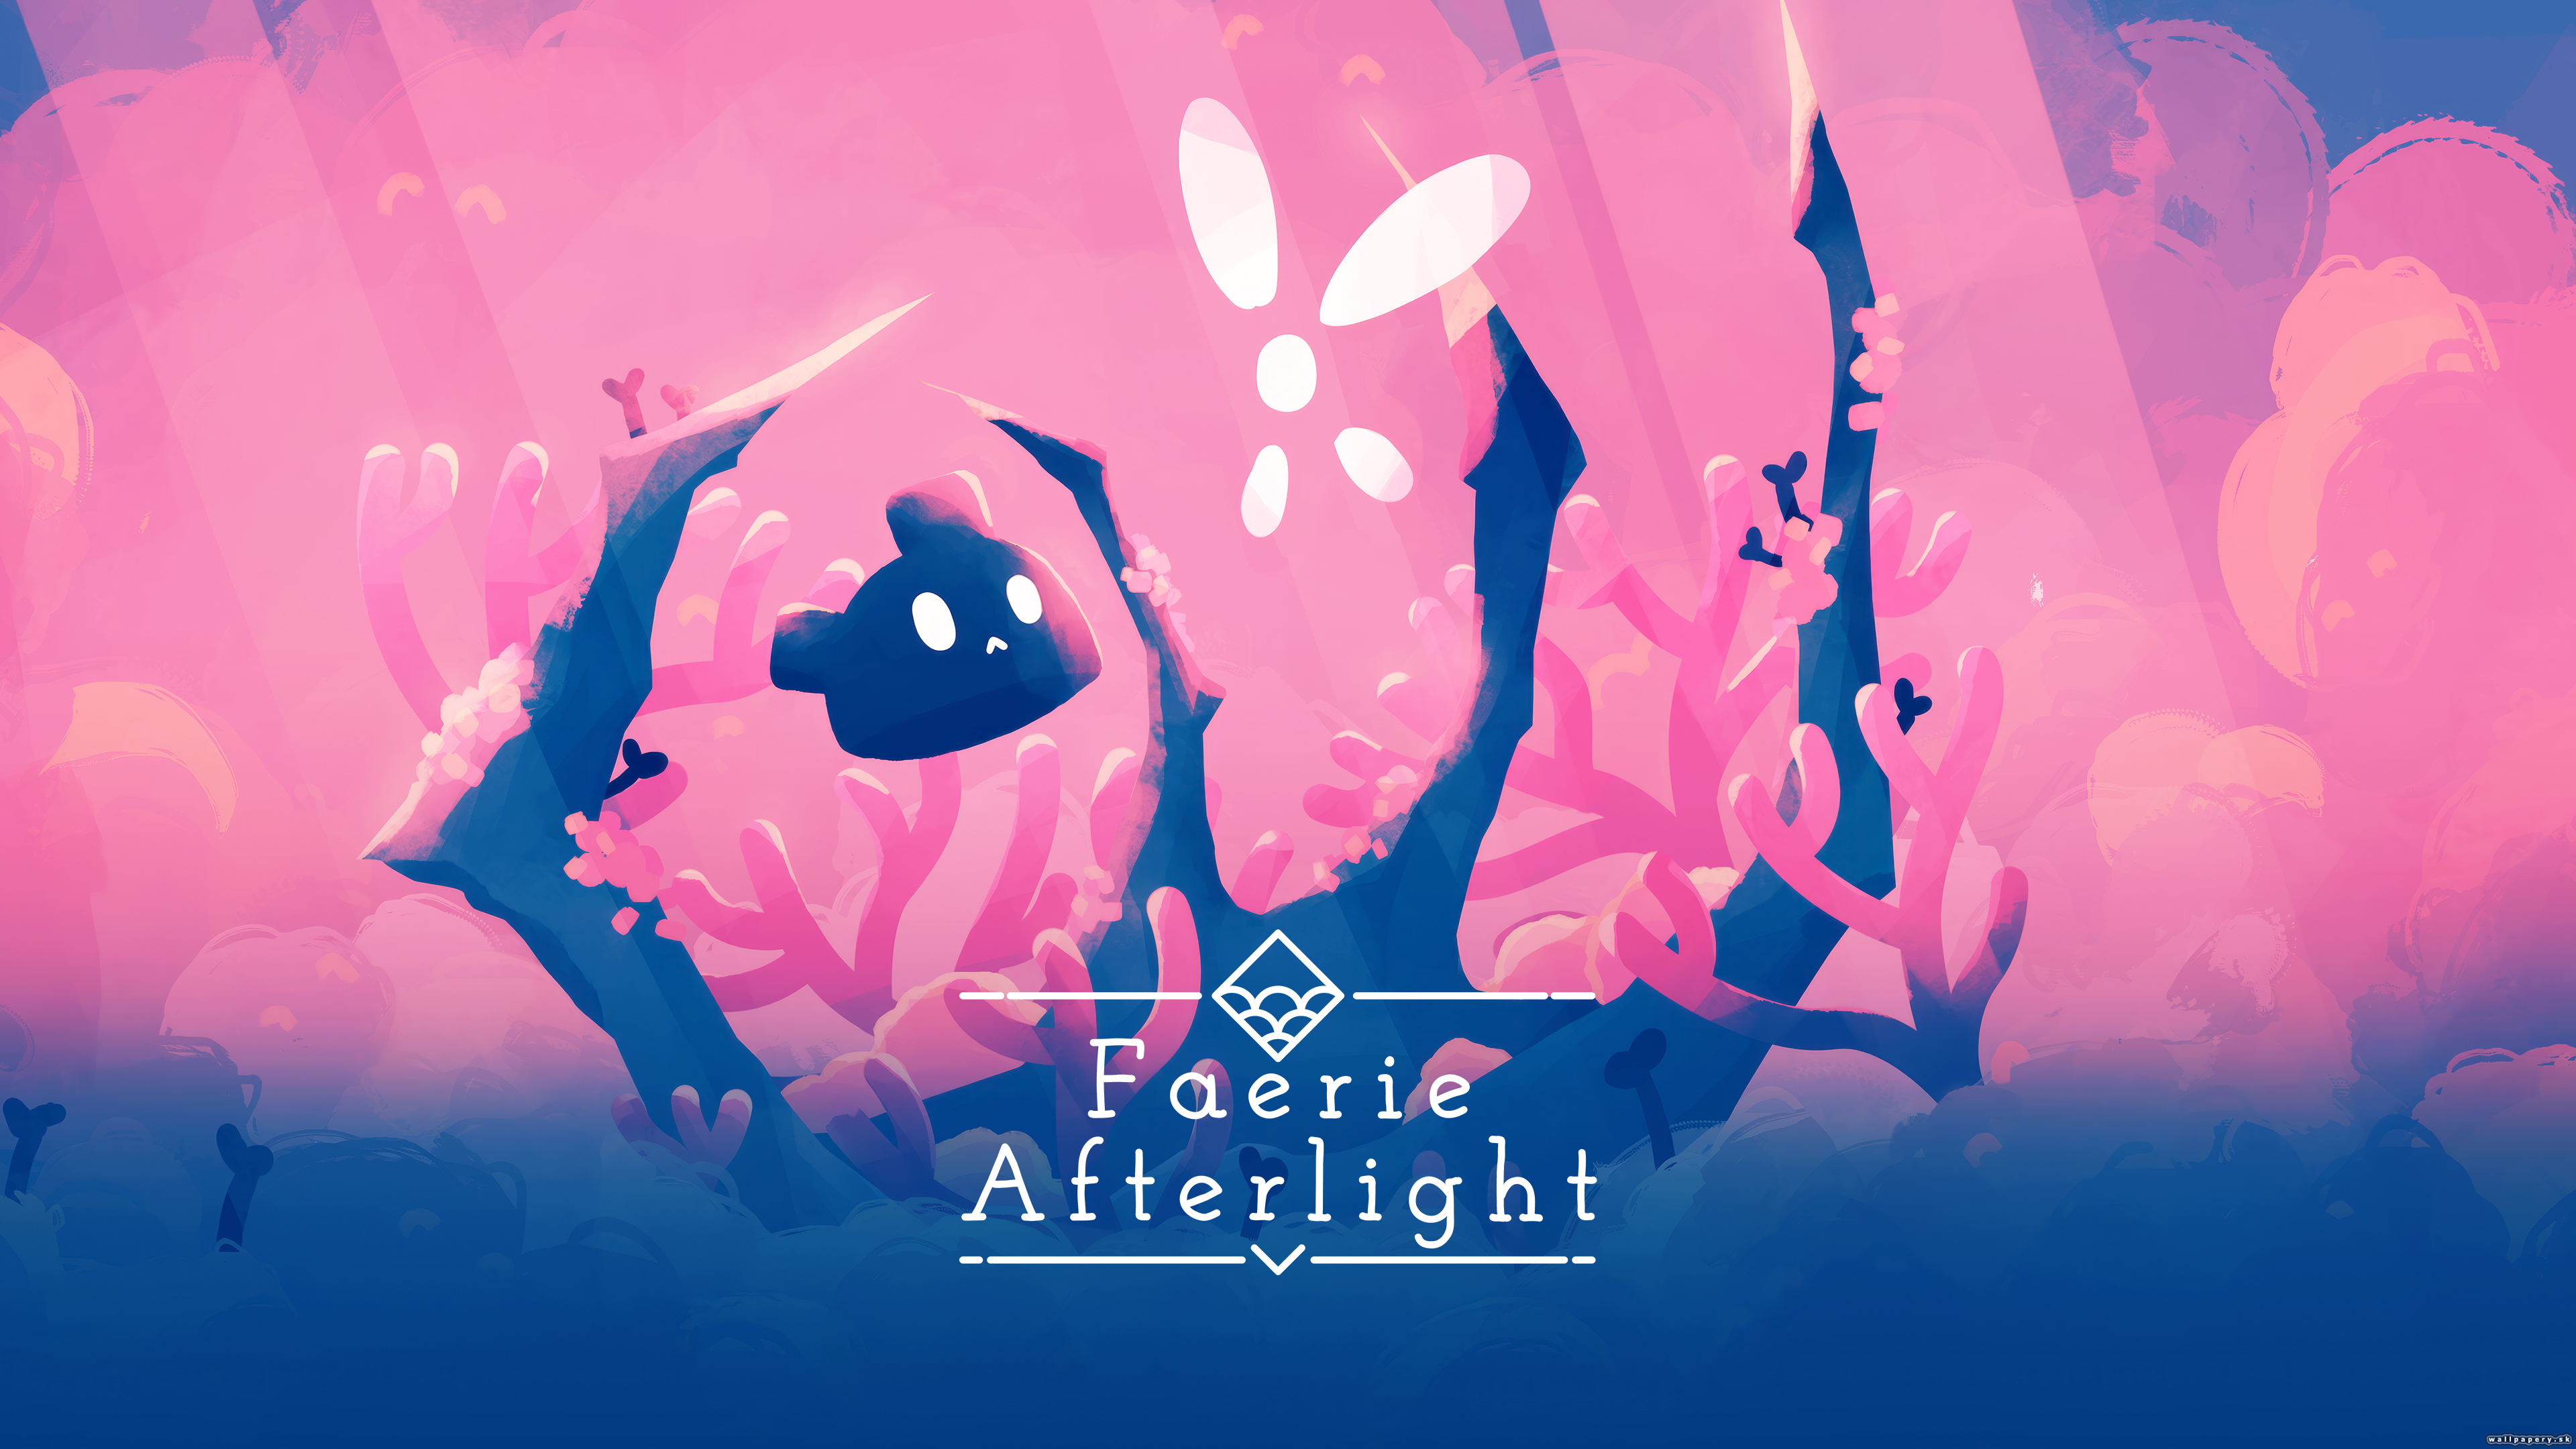 Faerie Afterlight - wallpaper 1